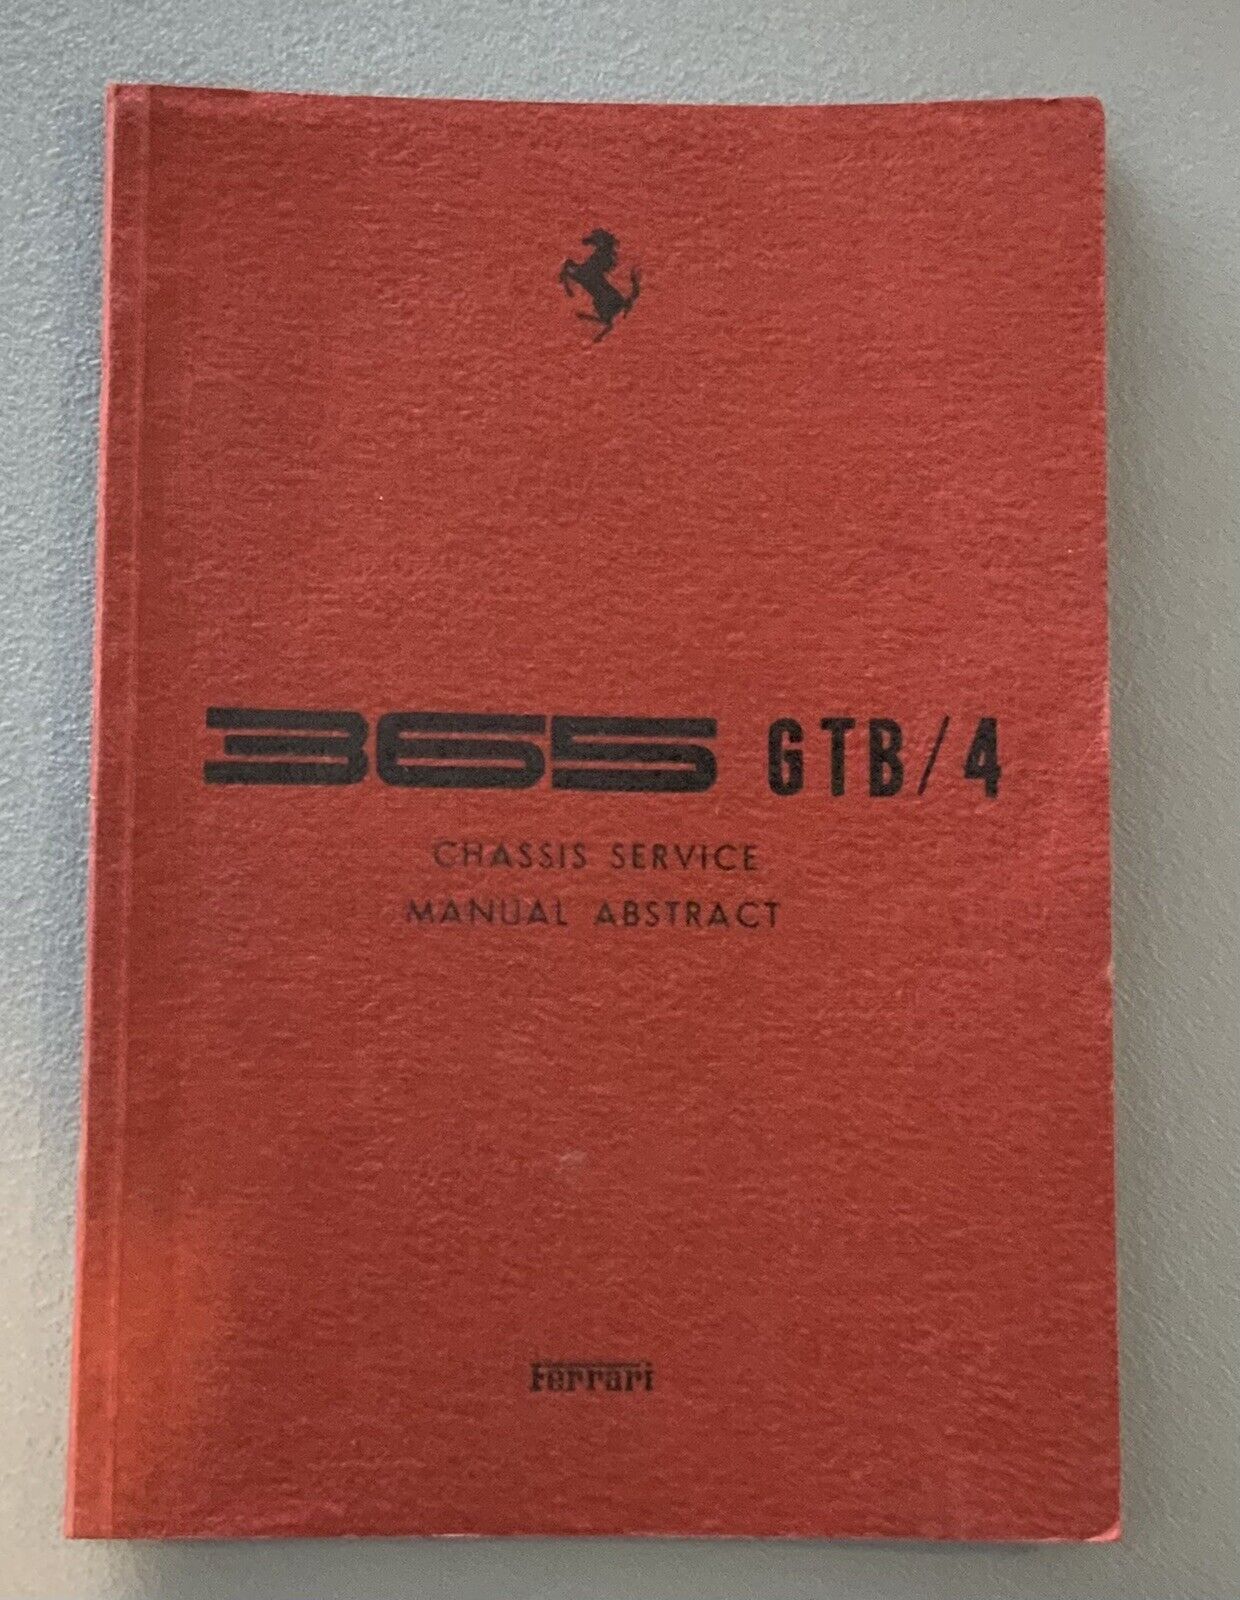 Ferrari 365 GTB/4 Chassis Service Manual Abstract (46/71); Excellent Original